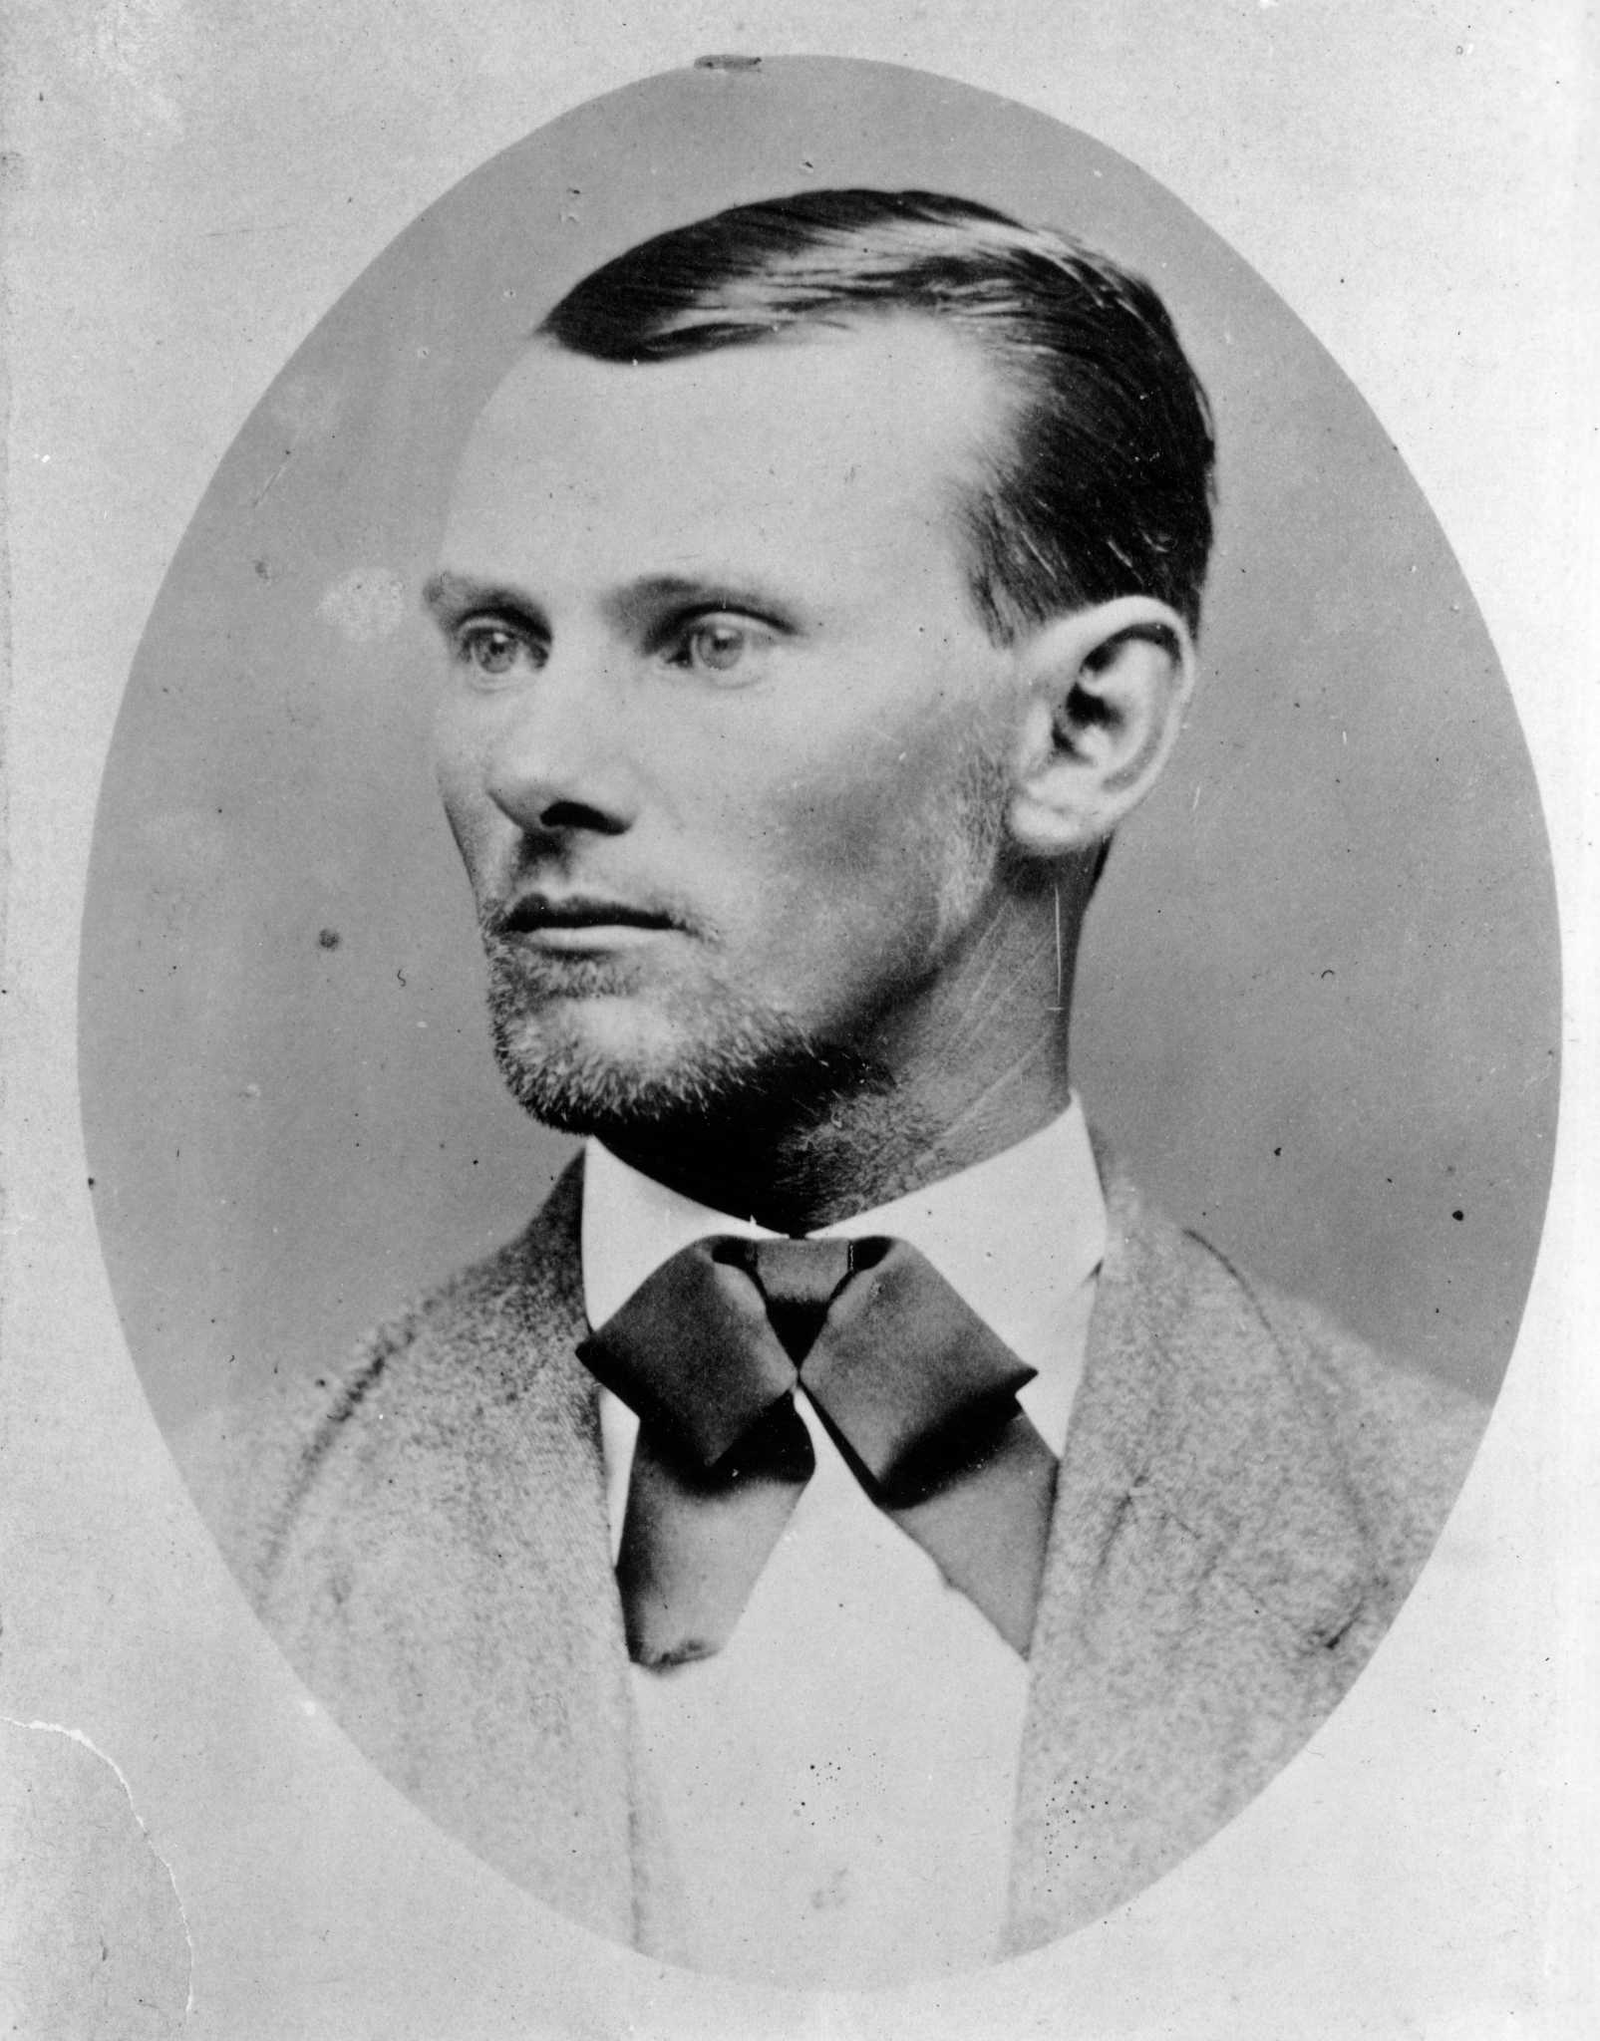 Jesse James is one of America's greatest thugs - Jesse James, Wild West, Criminals, Legend, USA, Civil War, Biography, Historical photo, Longpost